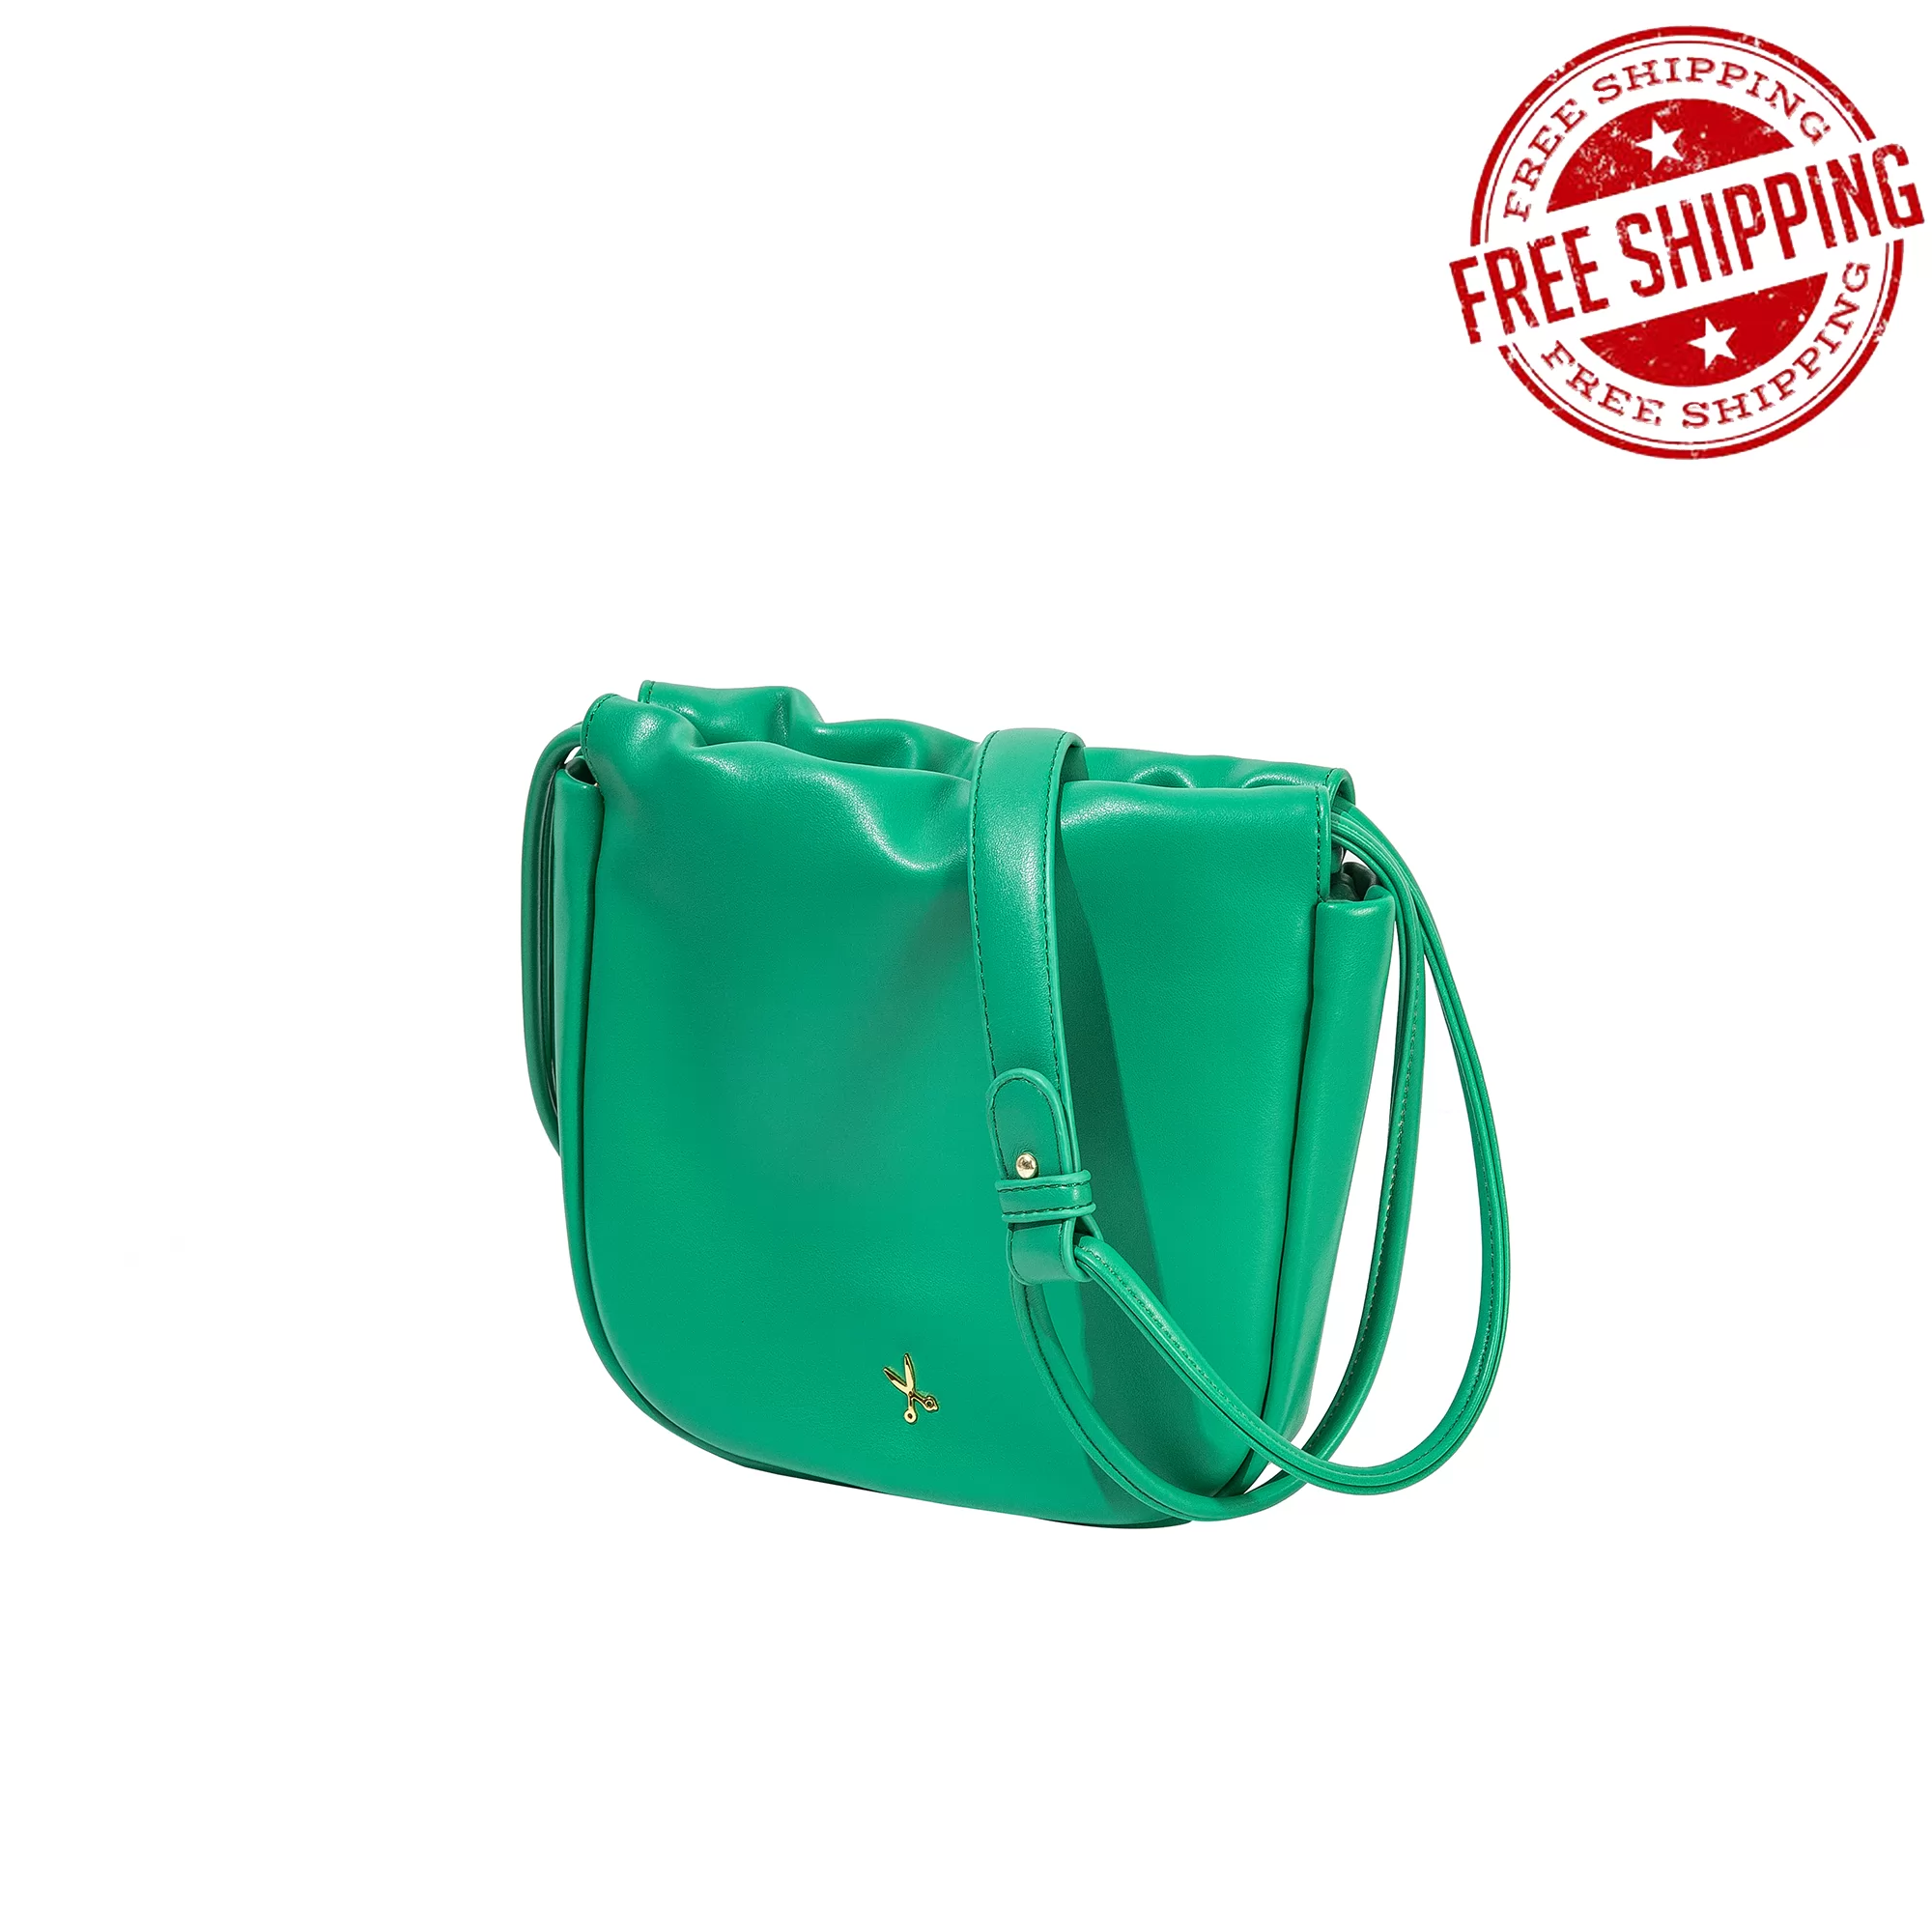 Dominivv Handbag-Shoulder Bags - Baguette bag - PU bags